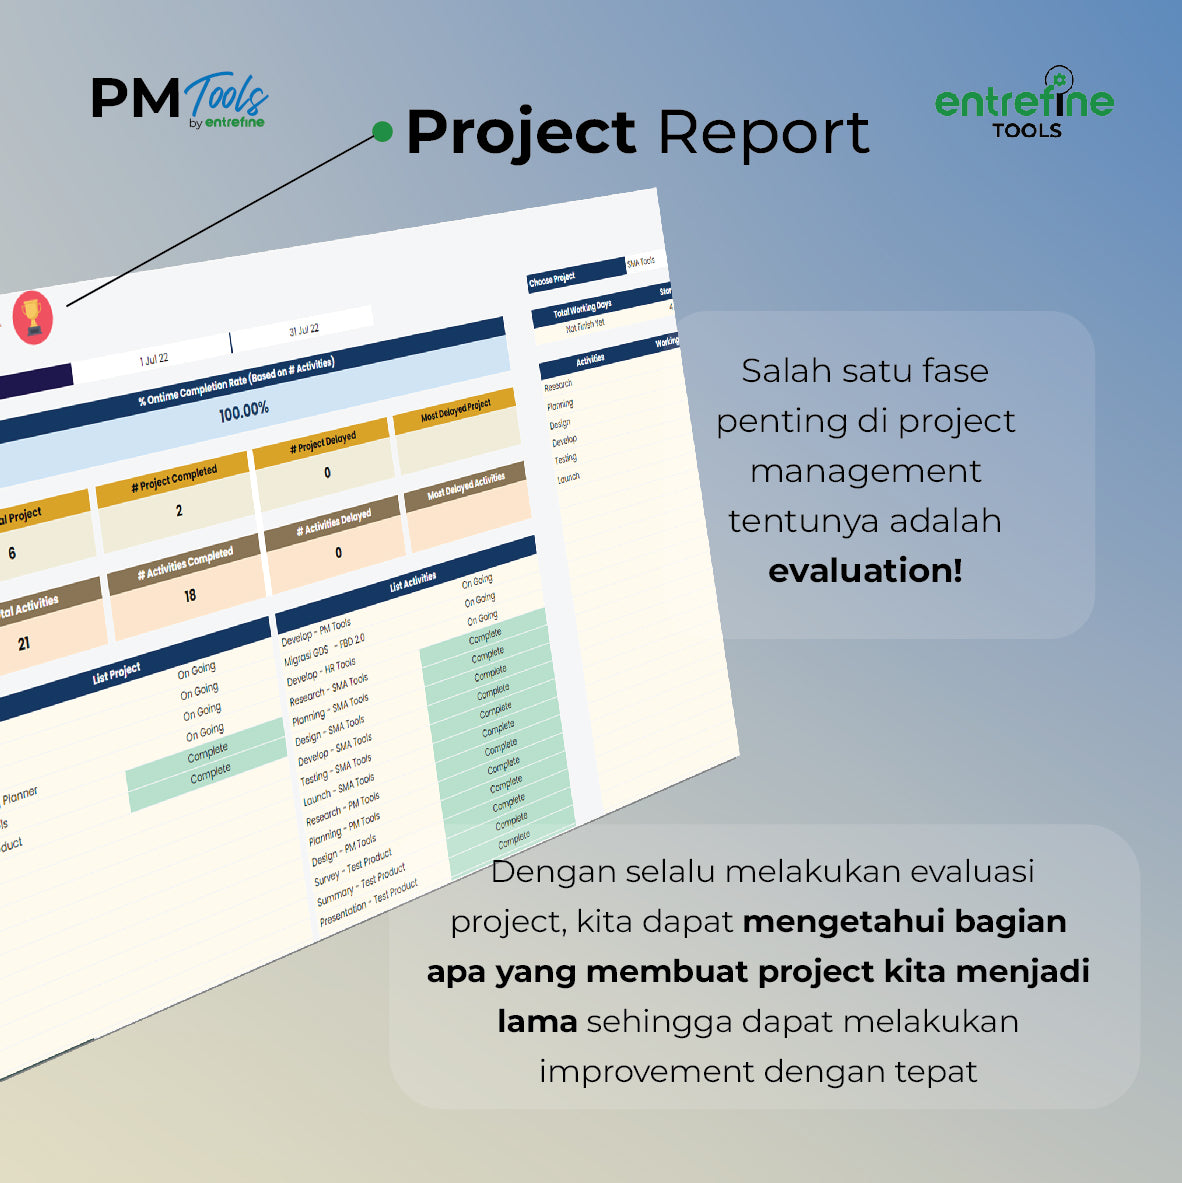 Project Management Tools